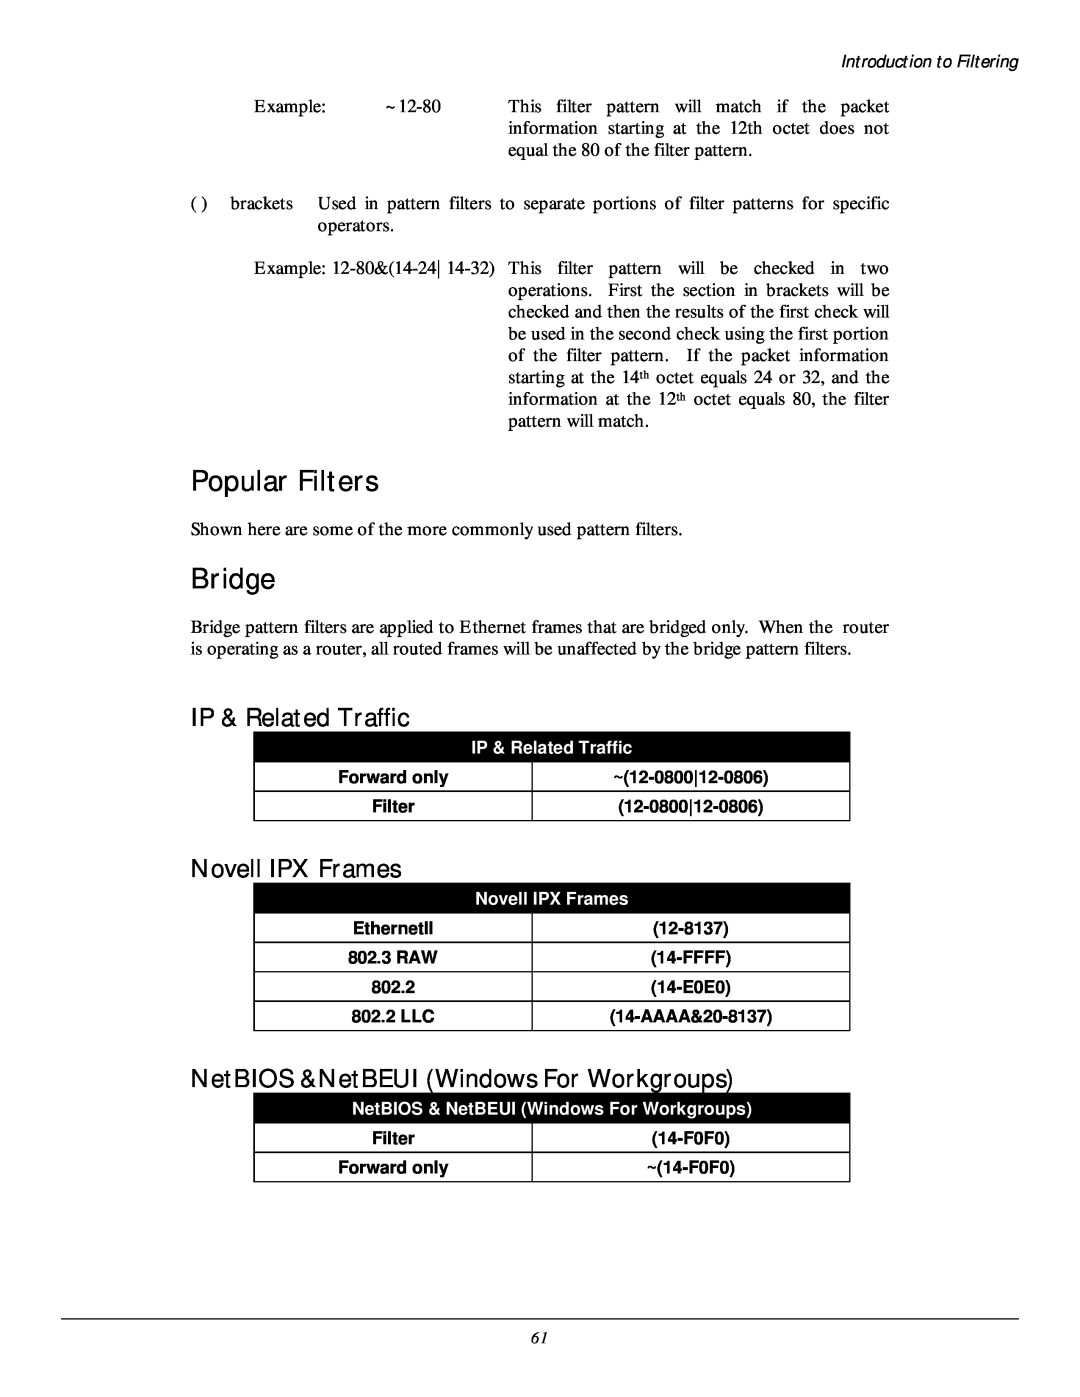 Black Box LR5200A-R2, LR5100A-T manual Popular Filters, Bridge, IP & Related Traffic, Novell IPX Frames 